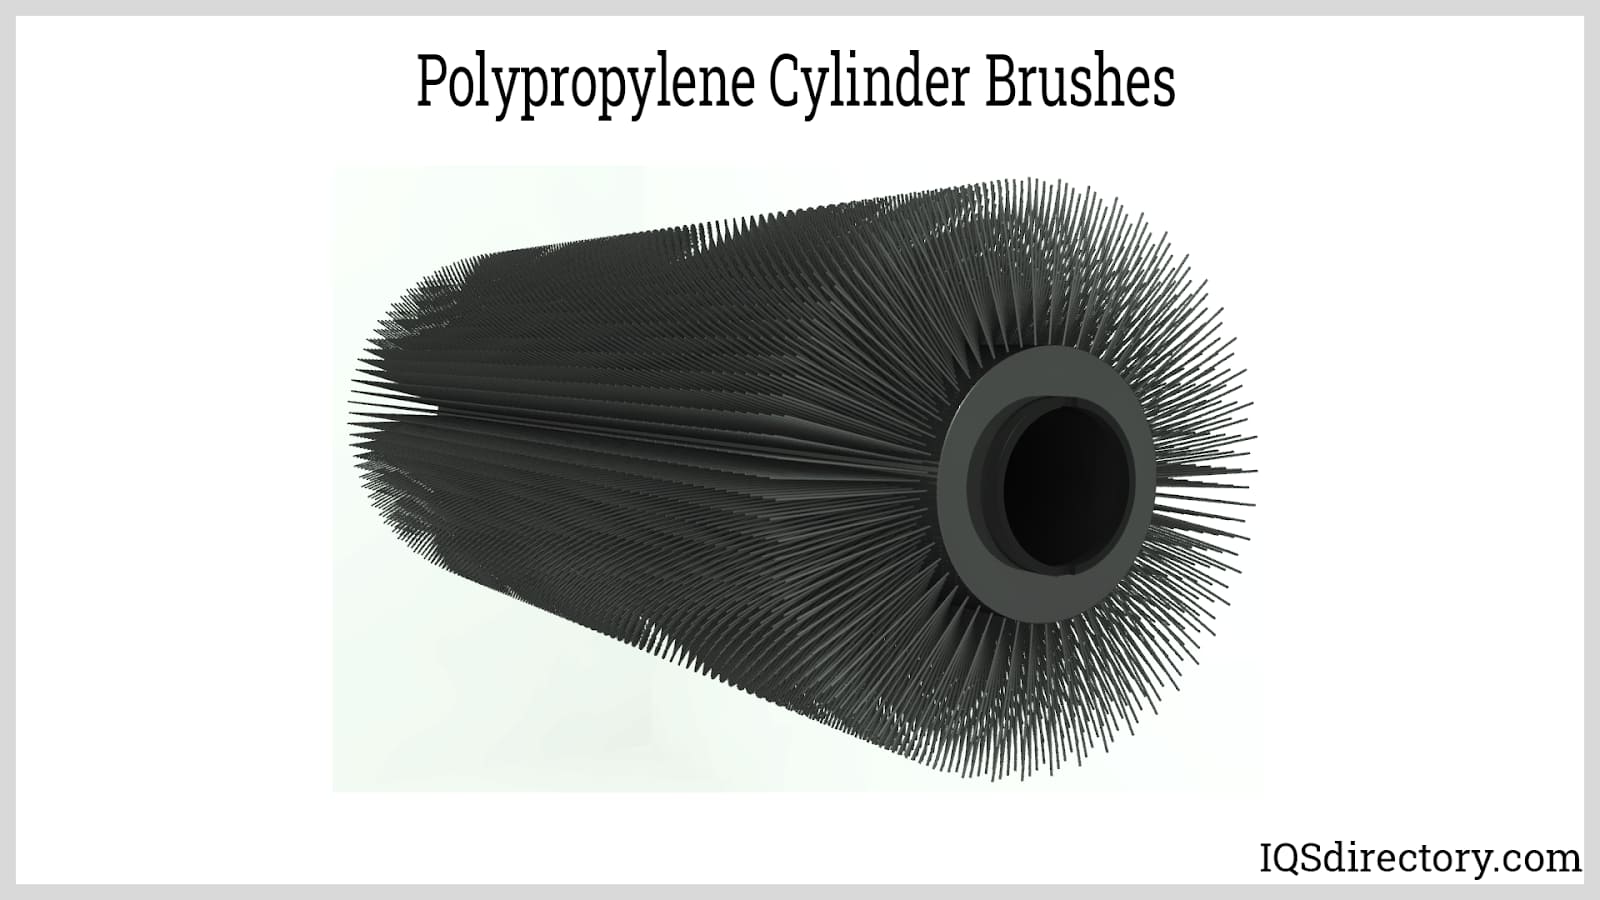 Polypropylene Cylinder Brushes